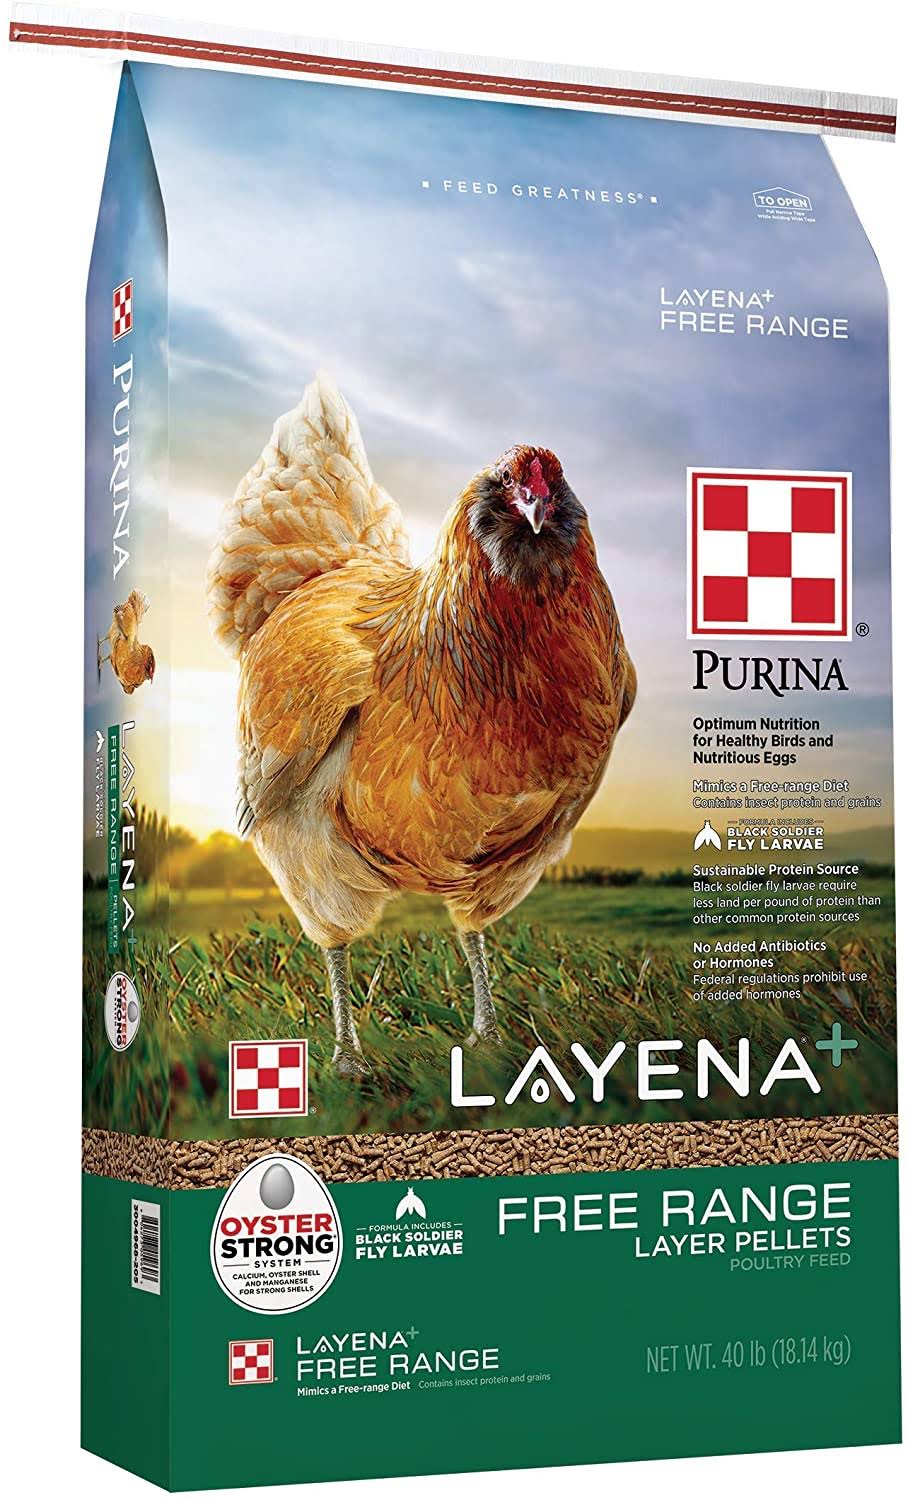 Purina - Layena Free Range Layer Chicken FEED, 40 lb